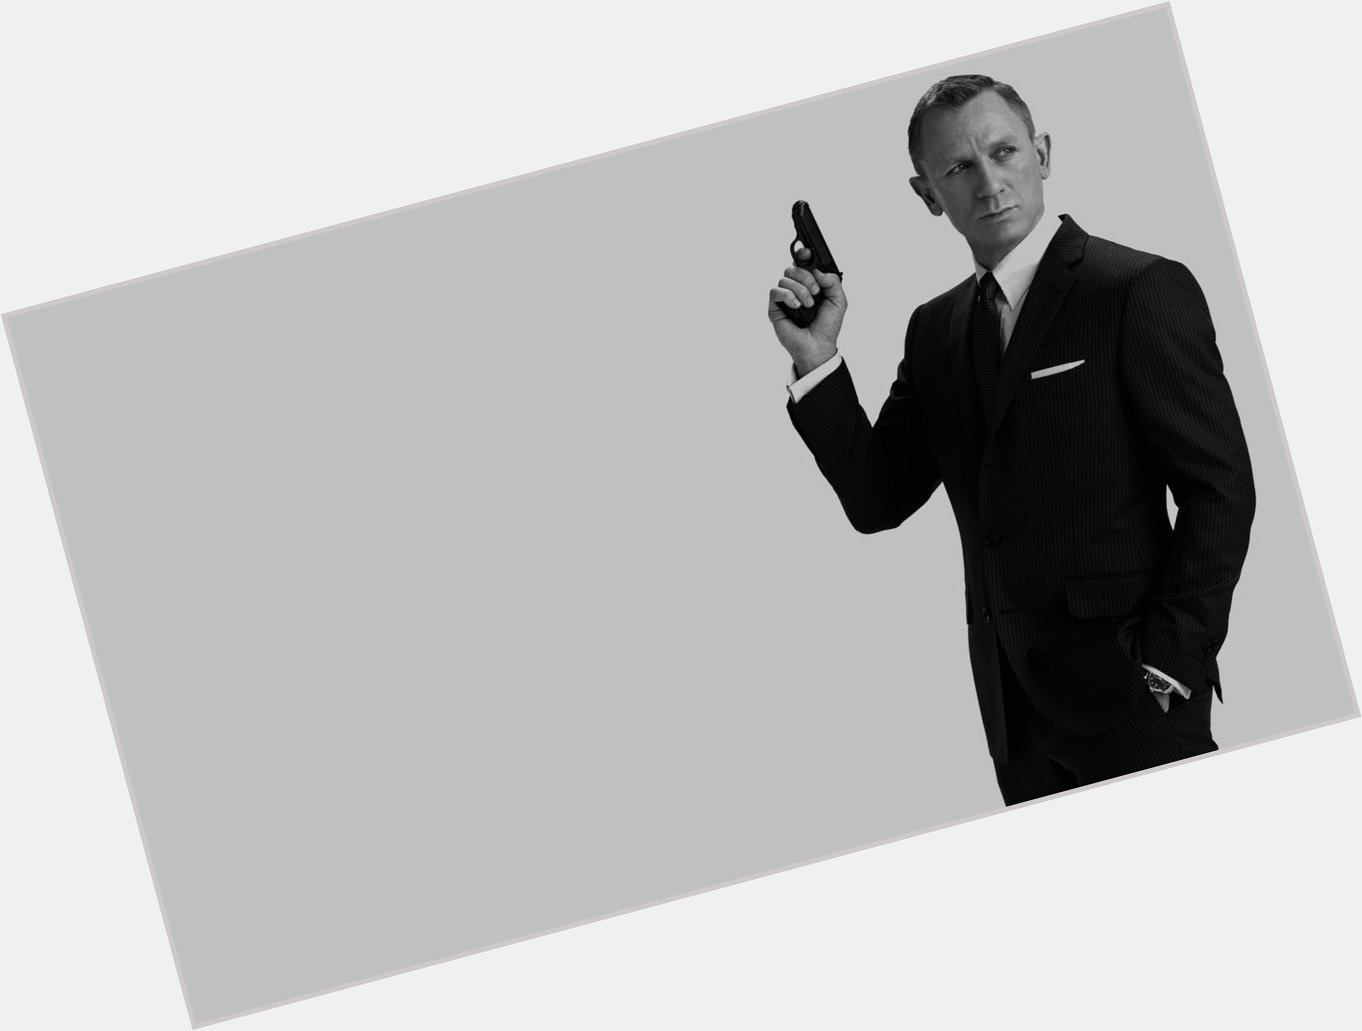 Happy 49th birthday Bond, James Bond AKA Daniel Craig.
Born on this day, 1968.   